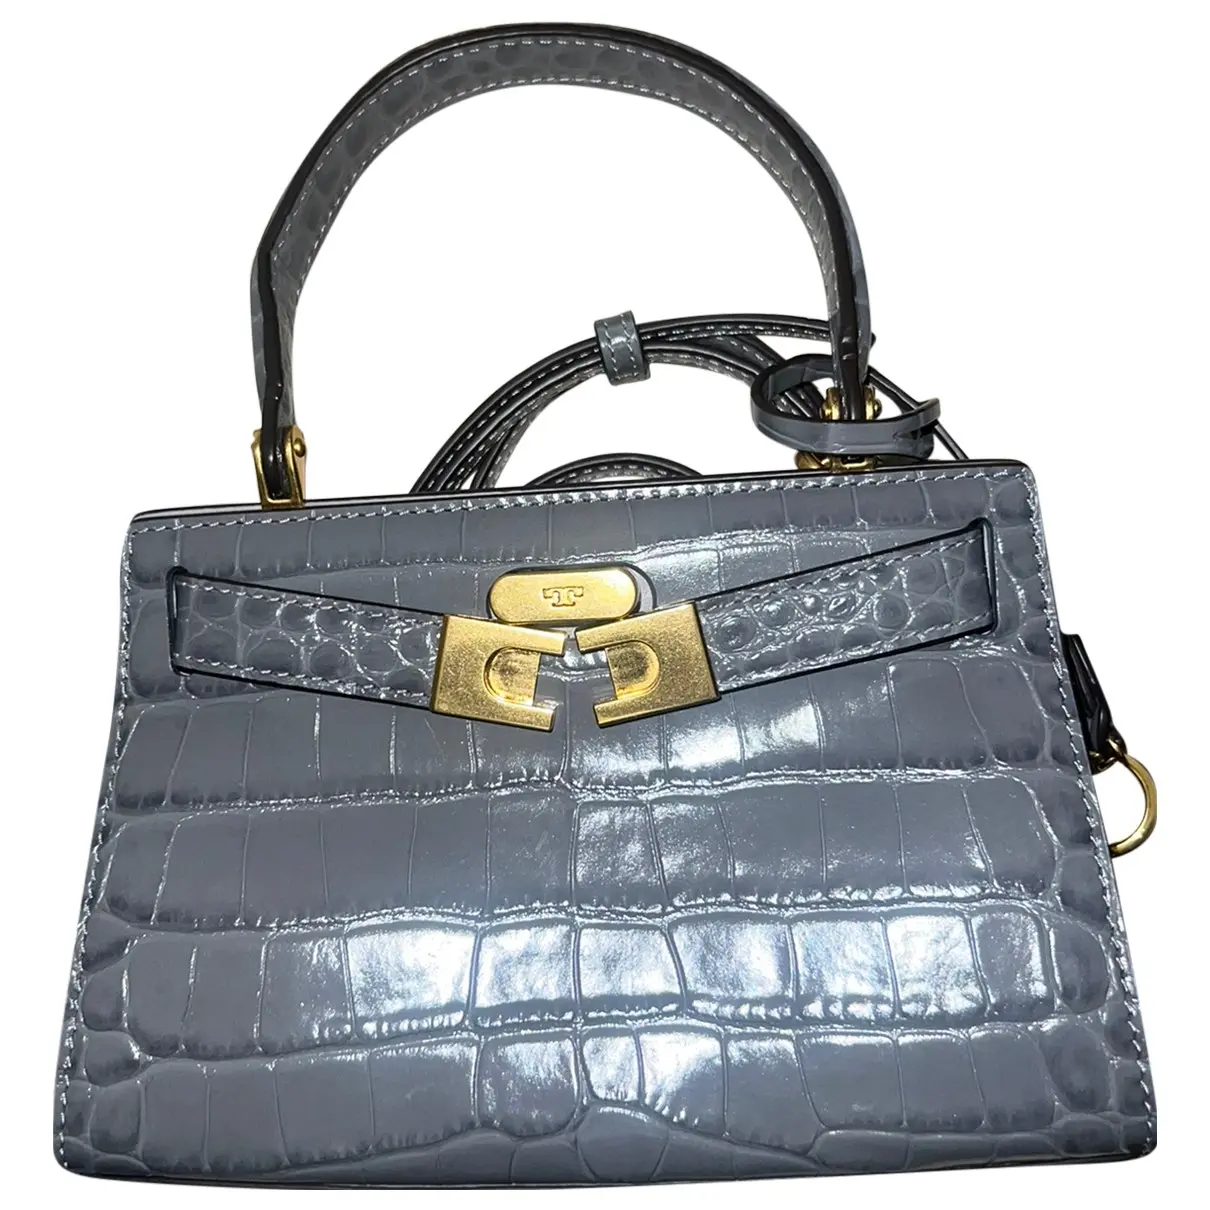 Lee Radziwill Petite leather handbag